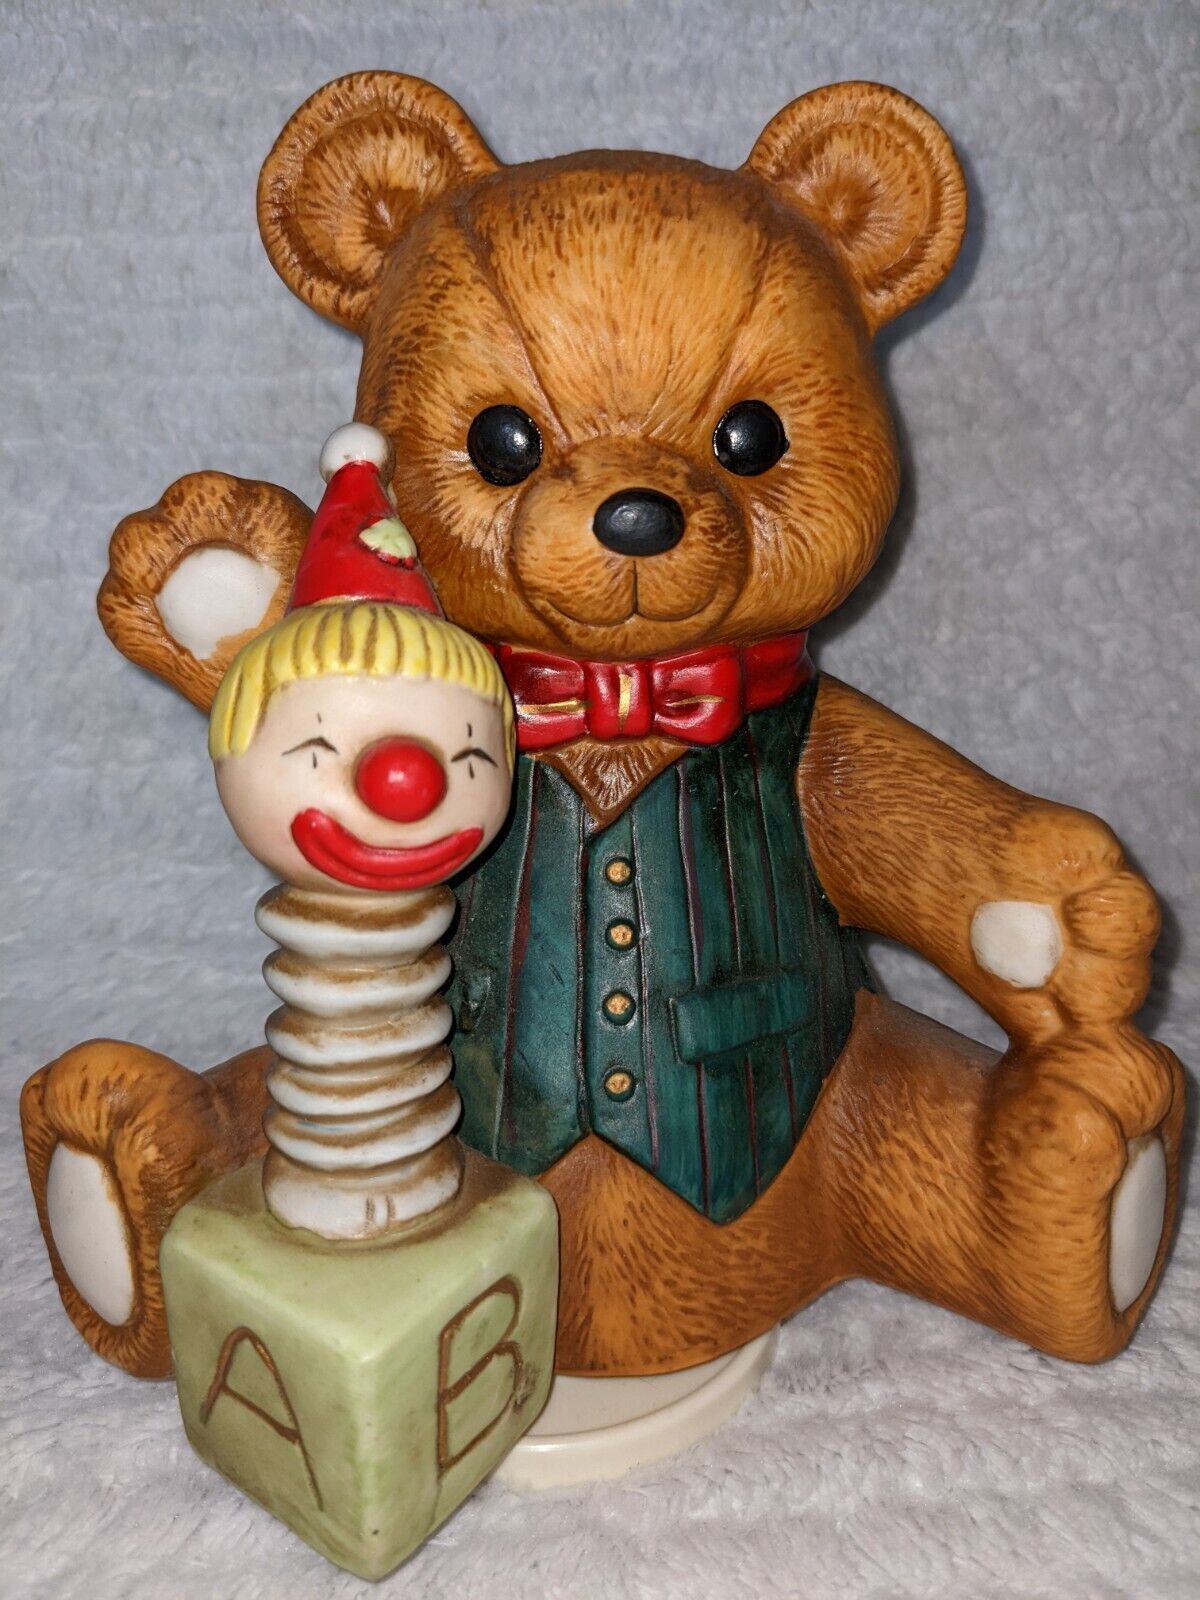 Teddy Bear Revolving Ceramic Music Box Plays \